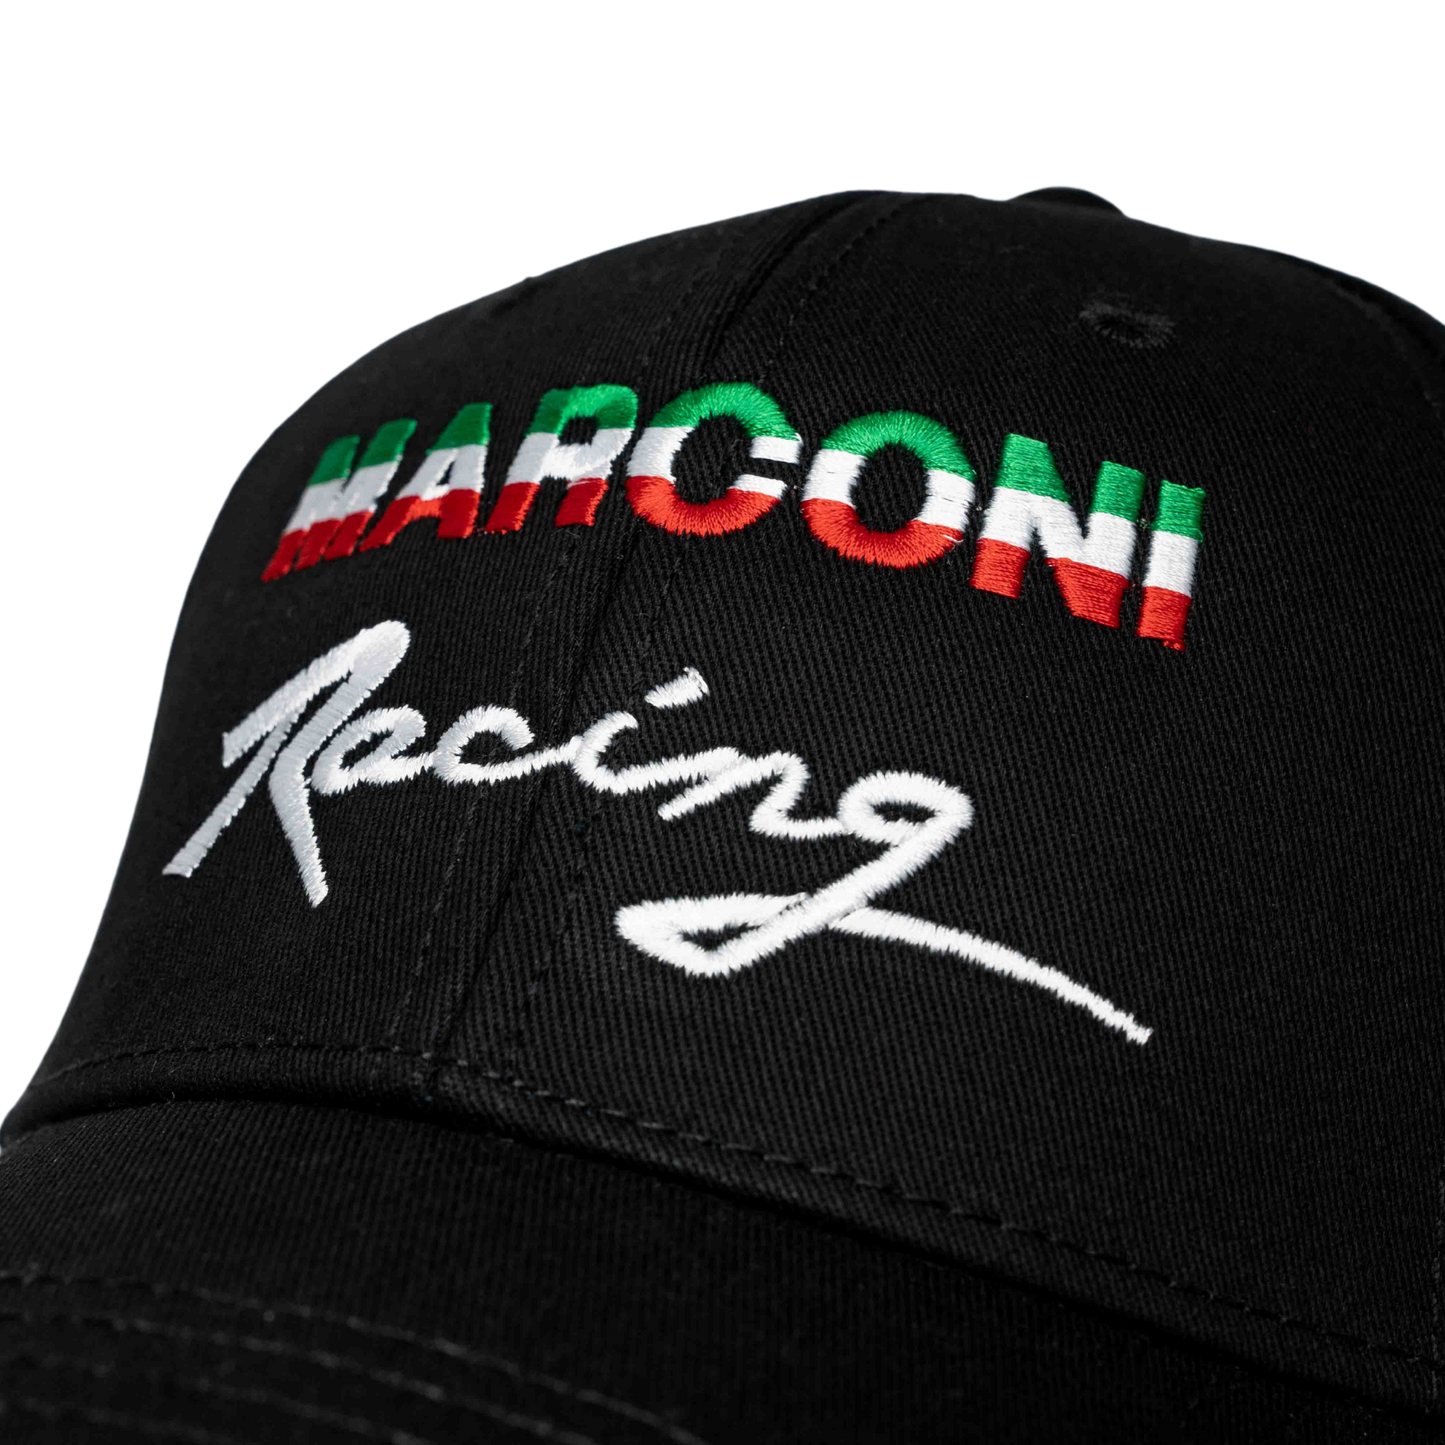 NEW - Vintage "Marconi Racing" Hat - Black